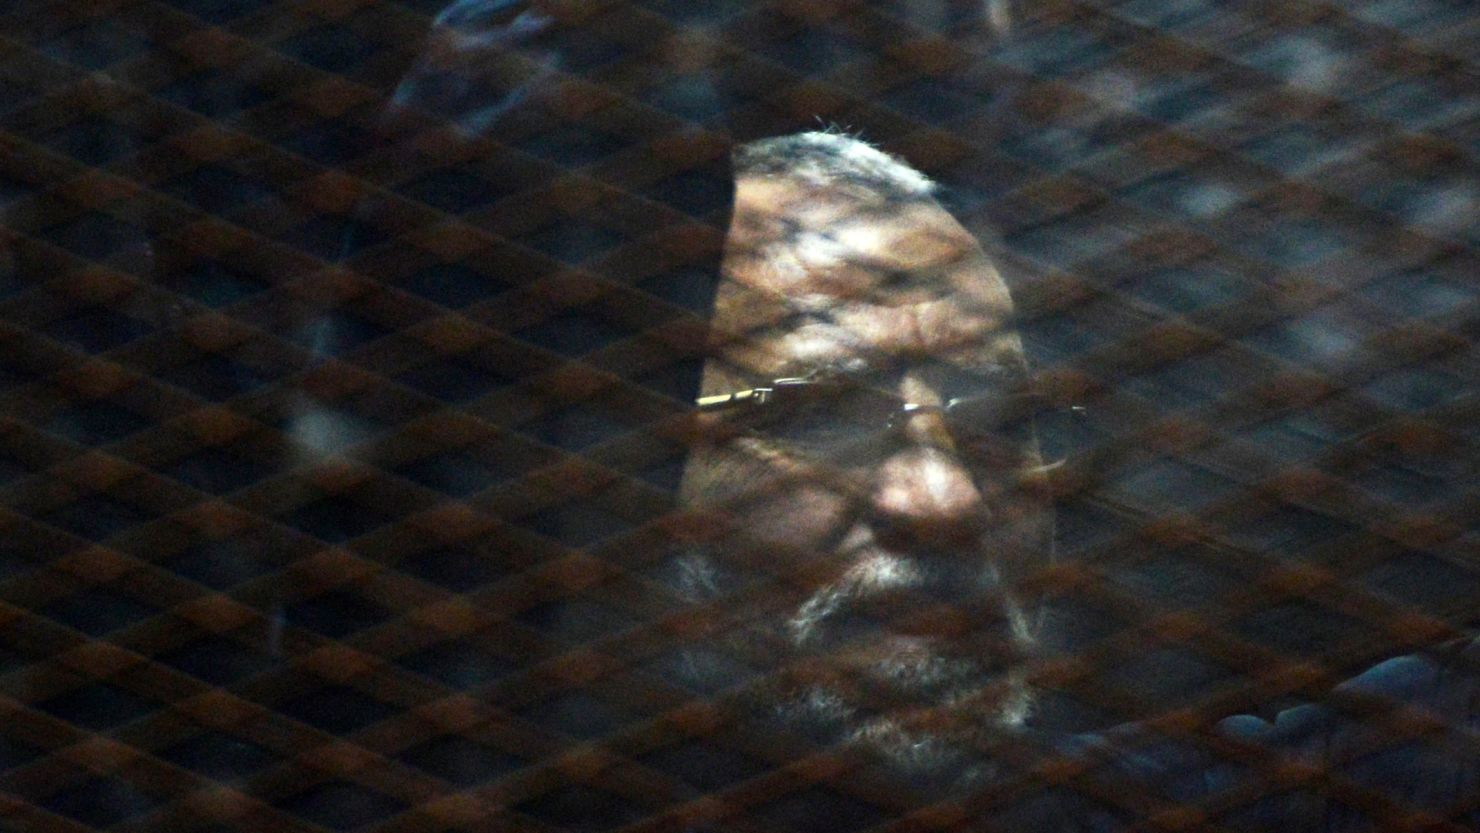 Egyptian Muslim Brotherhood leader Mohamed Badie stands behind bars while on trial in February 2015.